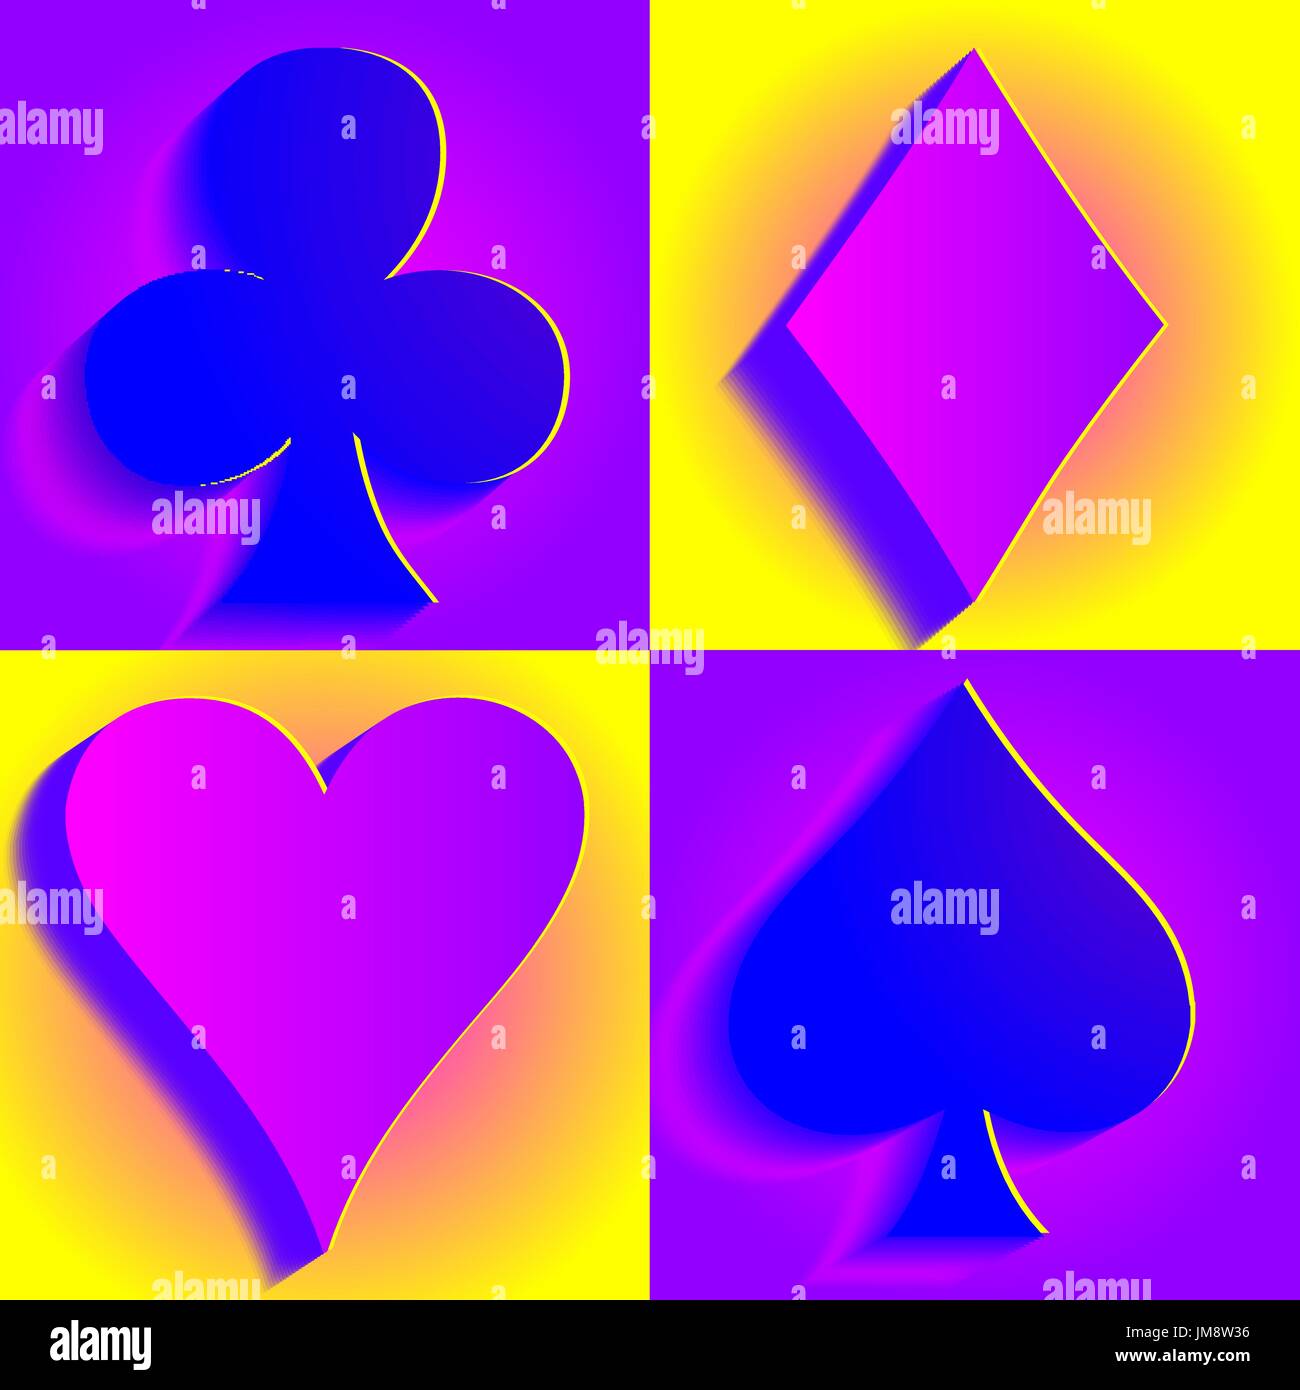 Hearts, diamonds, spades and clubs. vector illustration Stock Vector